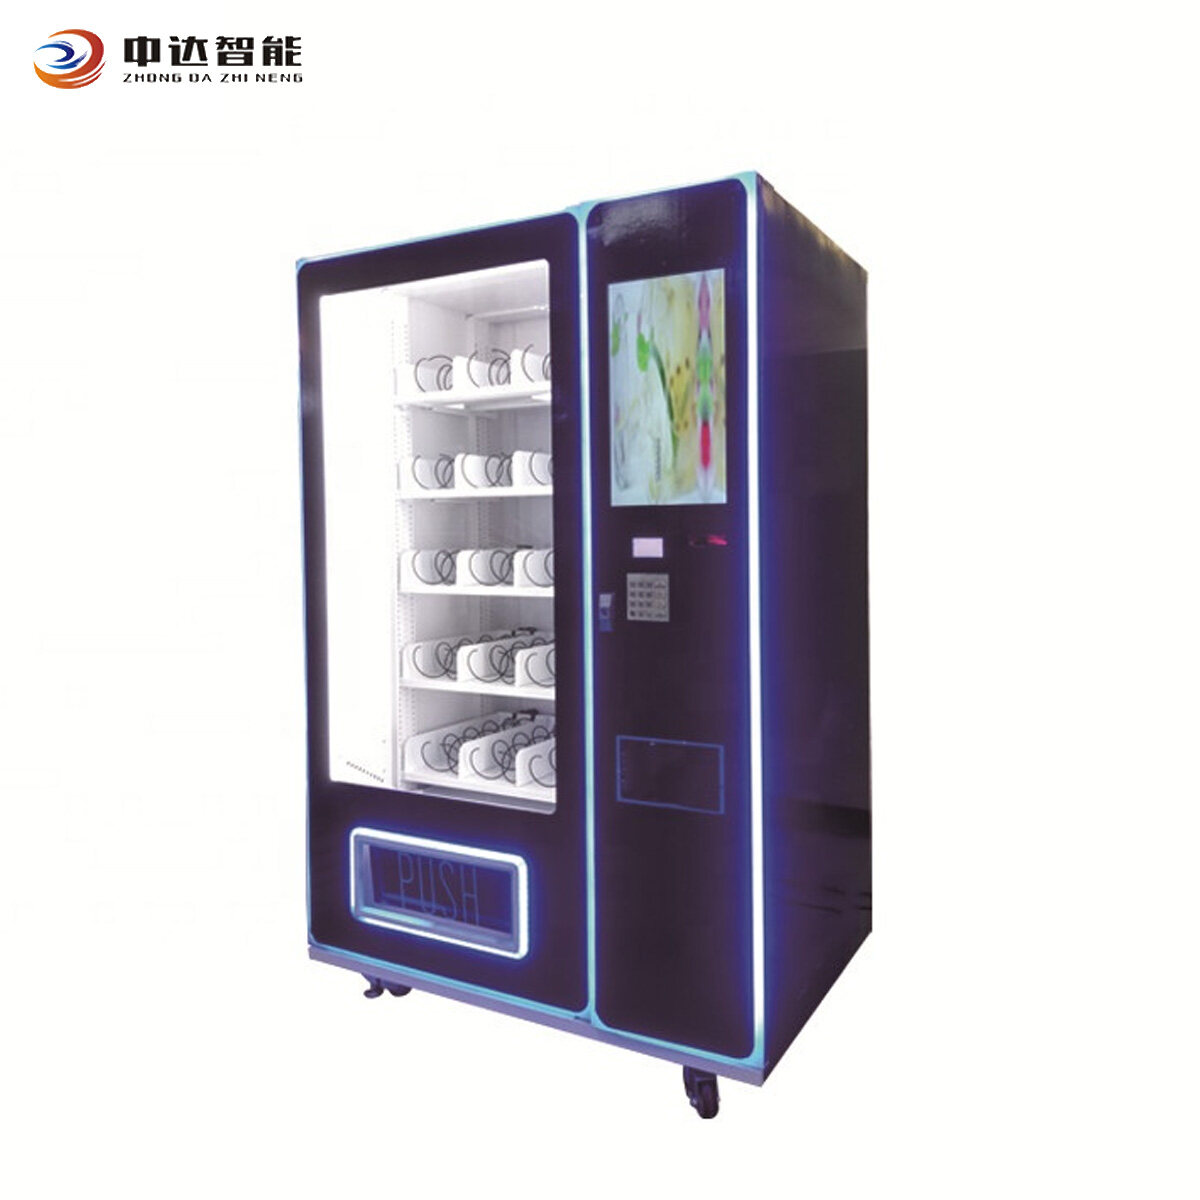 Wholesale countertop drink vending machine,Custom tabletop drink vending machine,home drink vending machine For Sale,snack drink vending machine Manufacturer